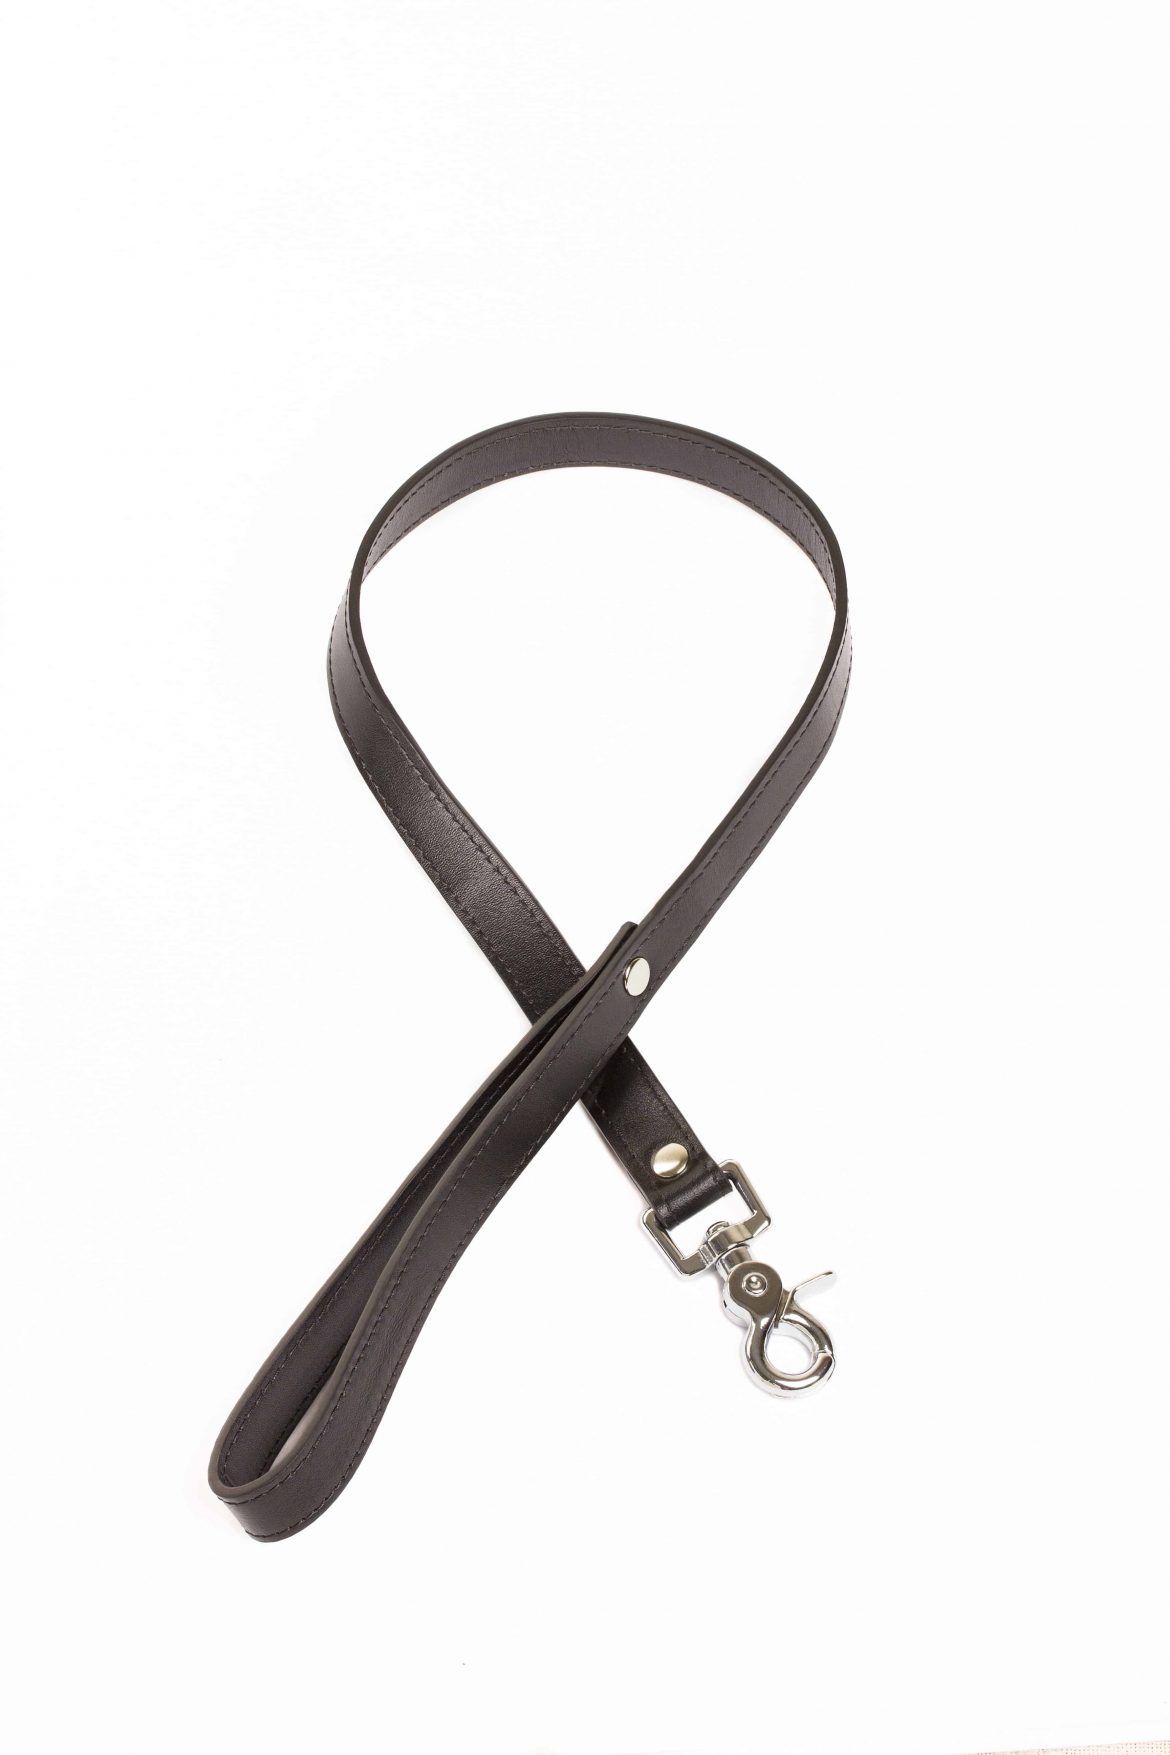 BDSM leather Bondage set collar and chain leash 8 scaled